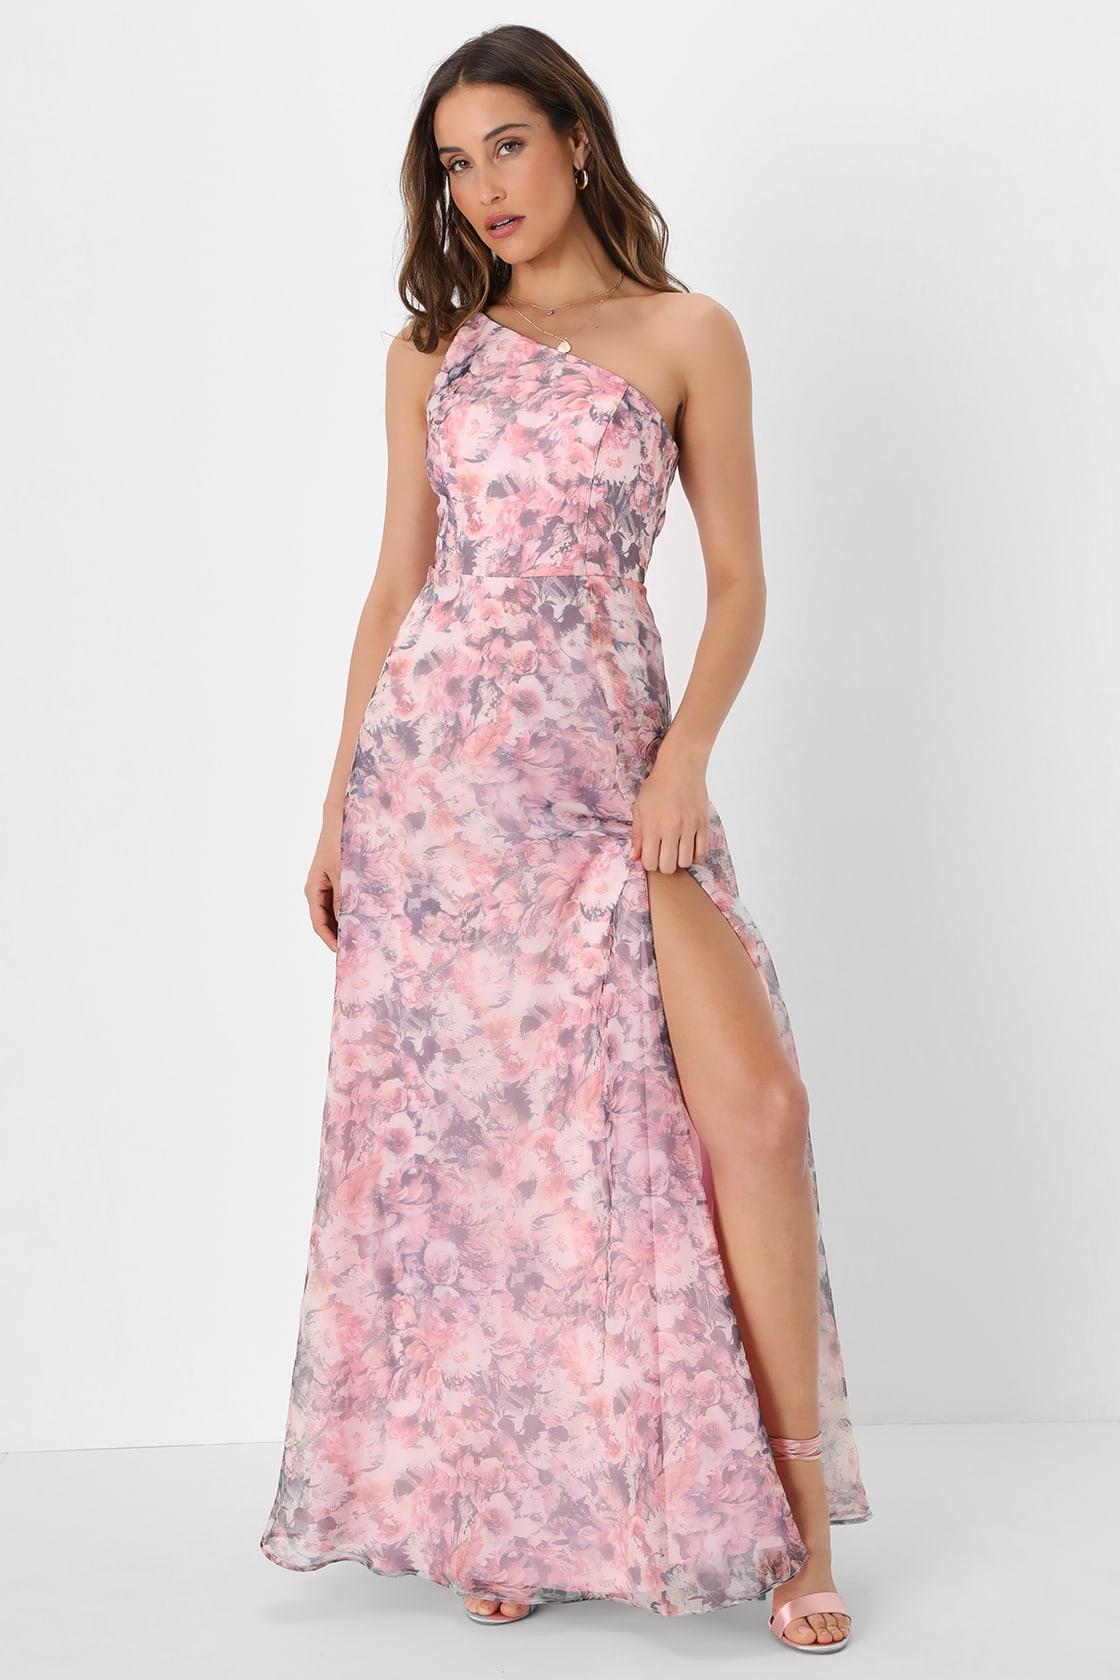 Exquisite Affair Pink Floral Organza One-Shoulder Maxi Dress